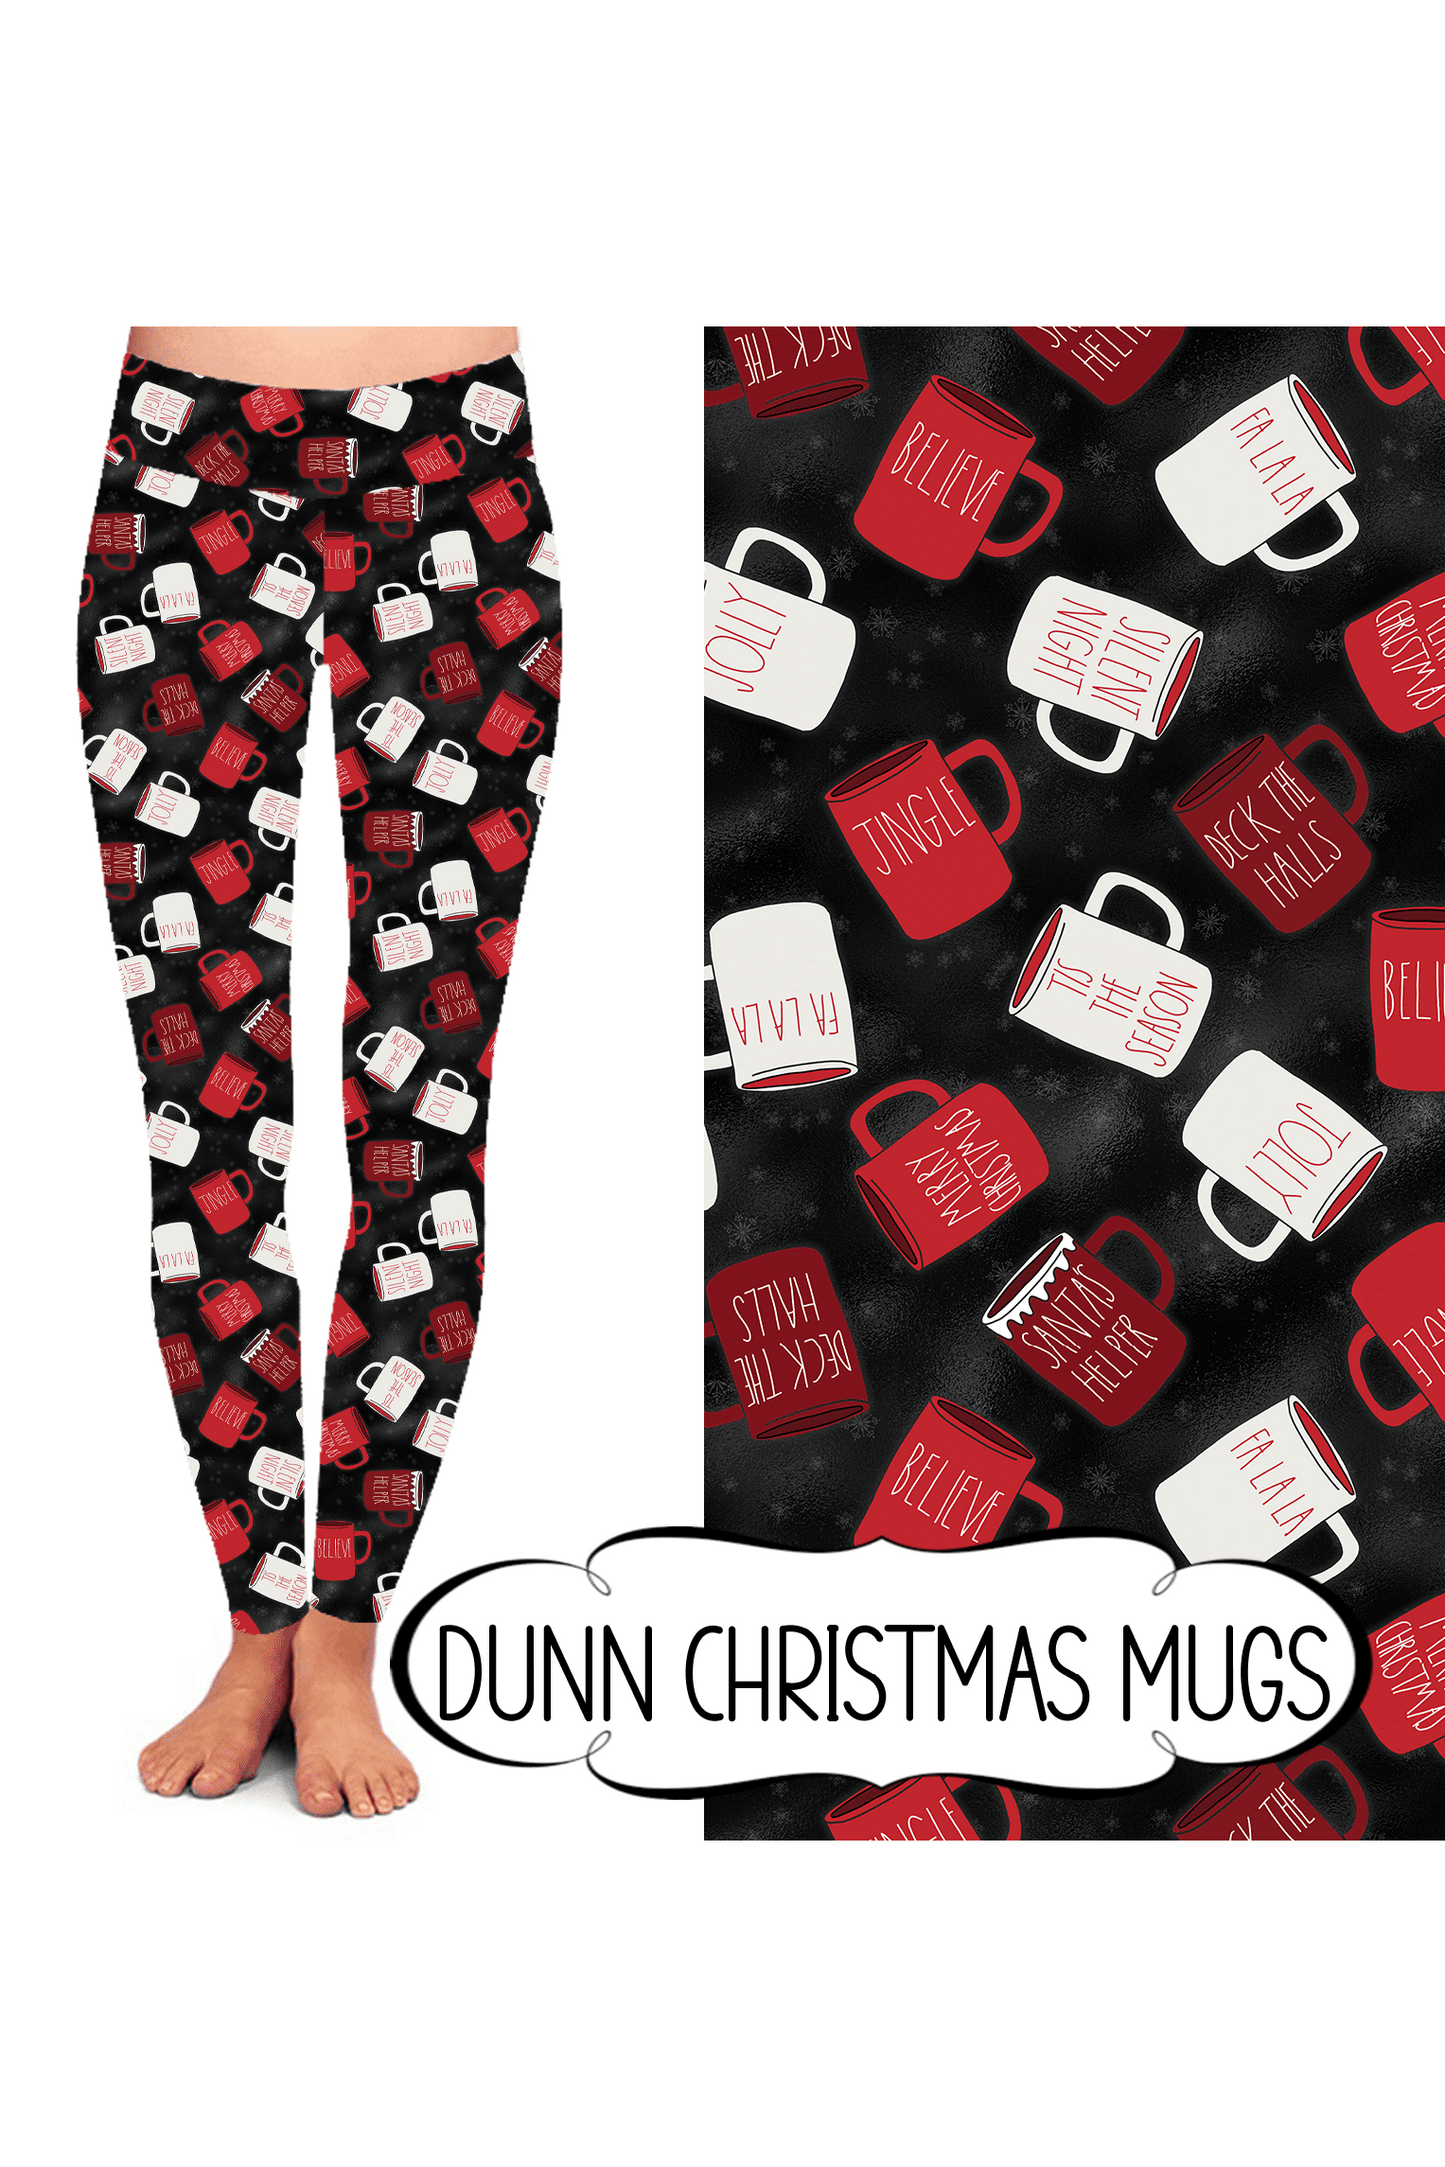 Yoga Style Leggings - Dunn Christmas Mugs by Eleven & Co.